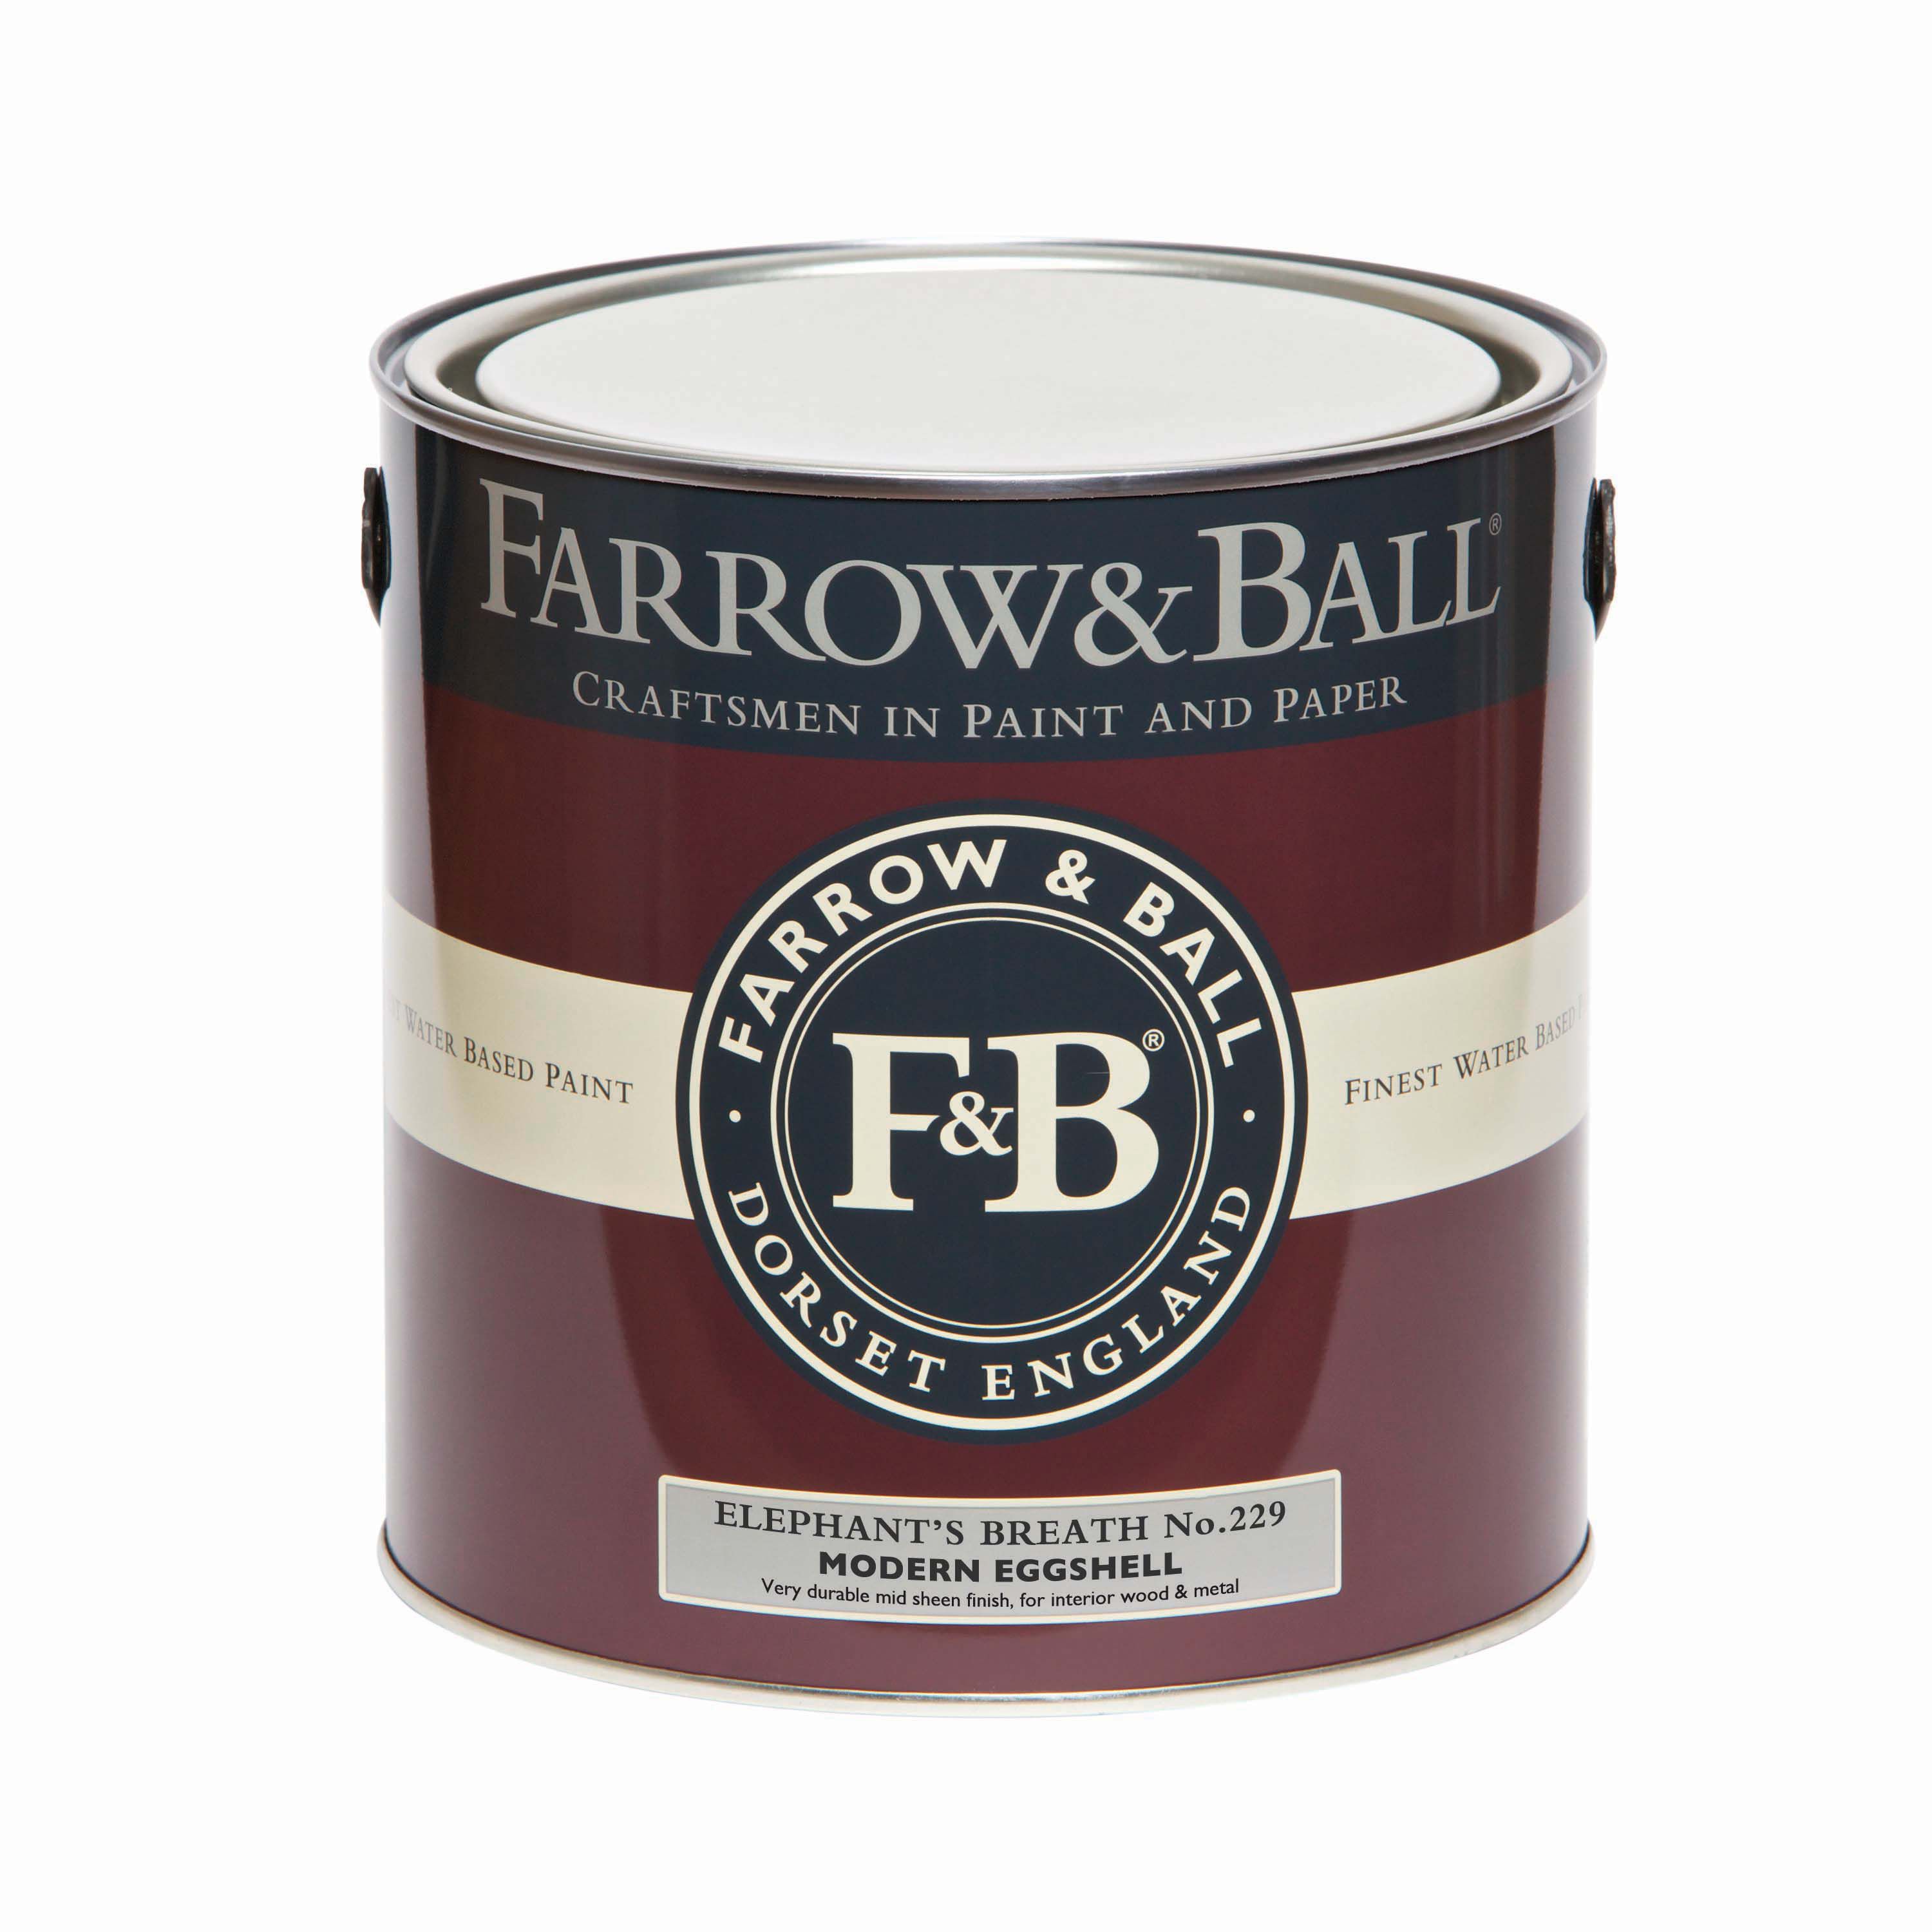 Farrow & Ball Modern Elephant's Breath No.229 Eggshell Paint, 2.5L